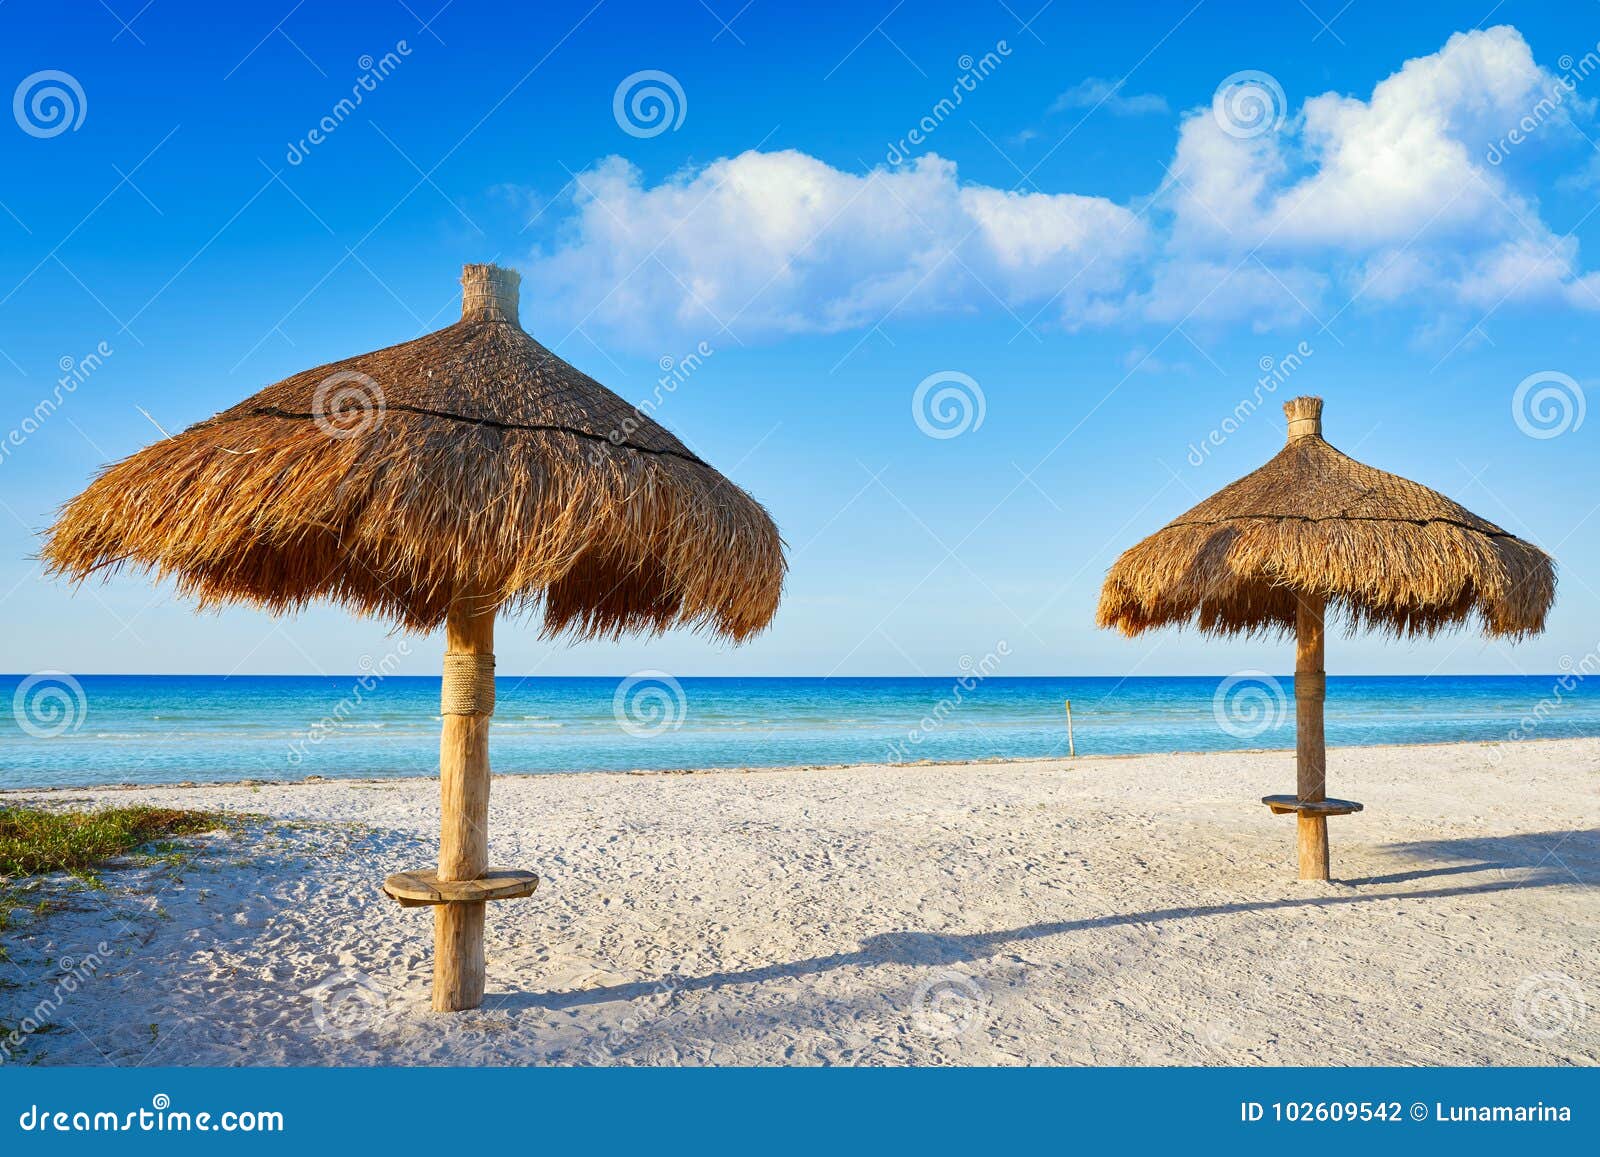 holbox island beach sunroof mexico